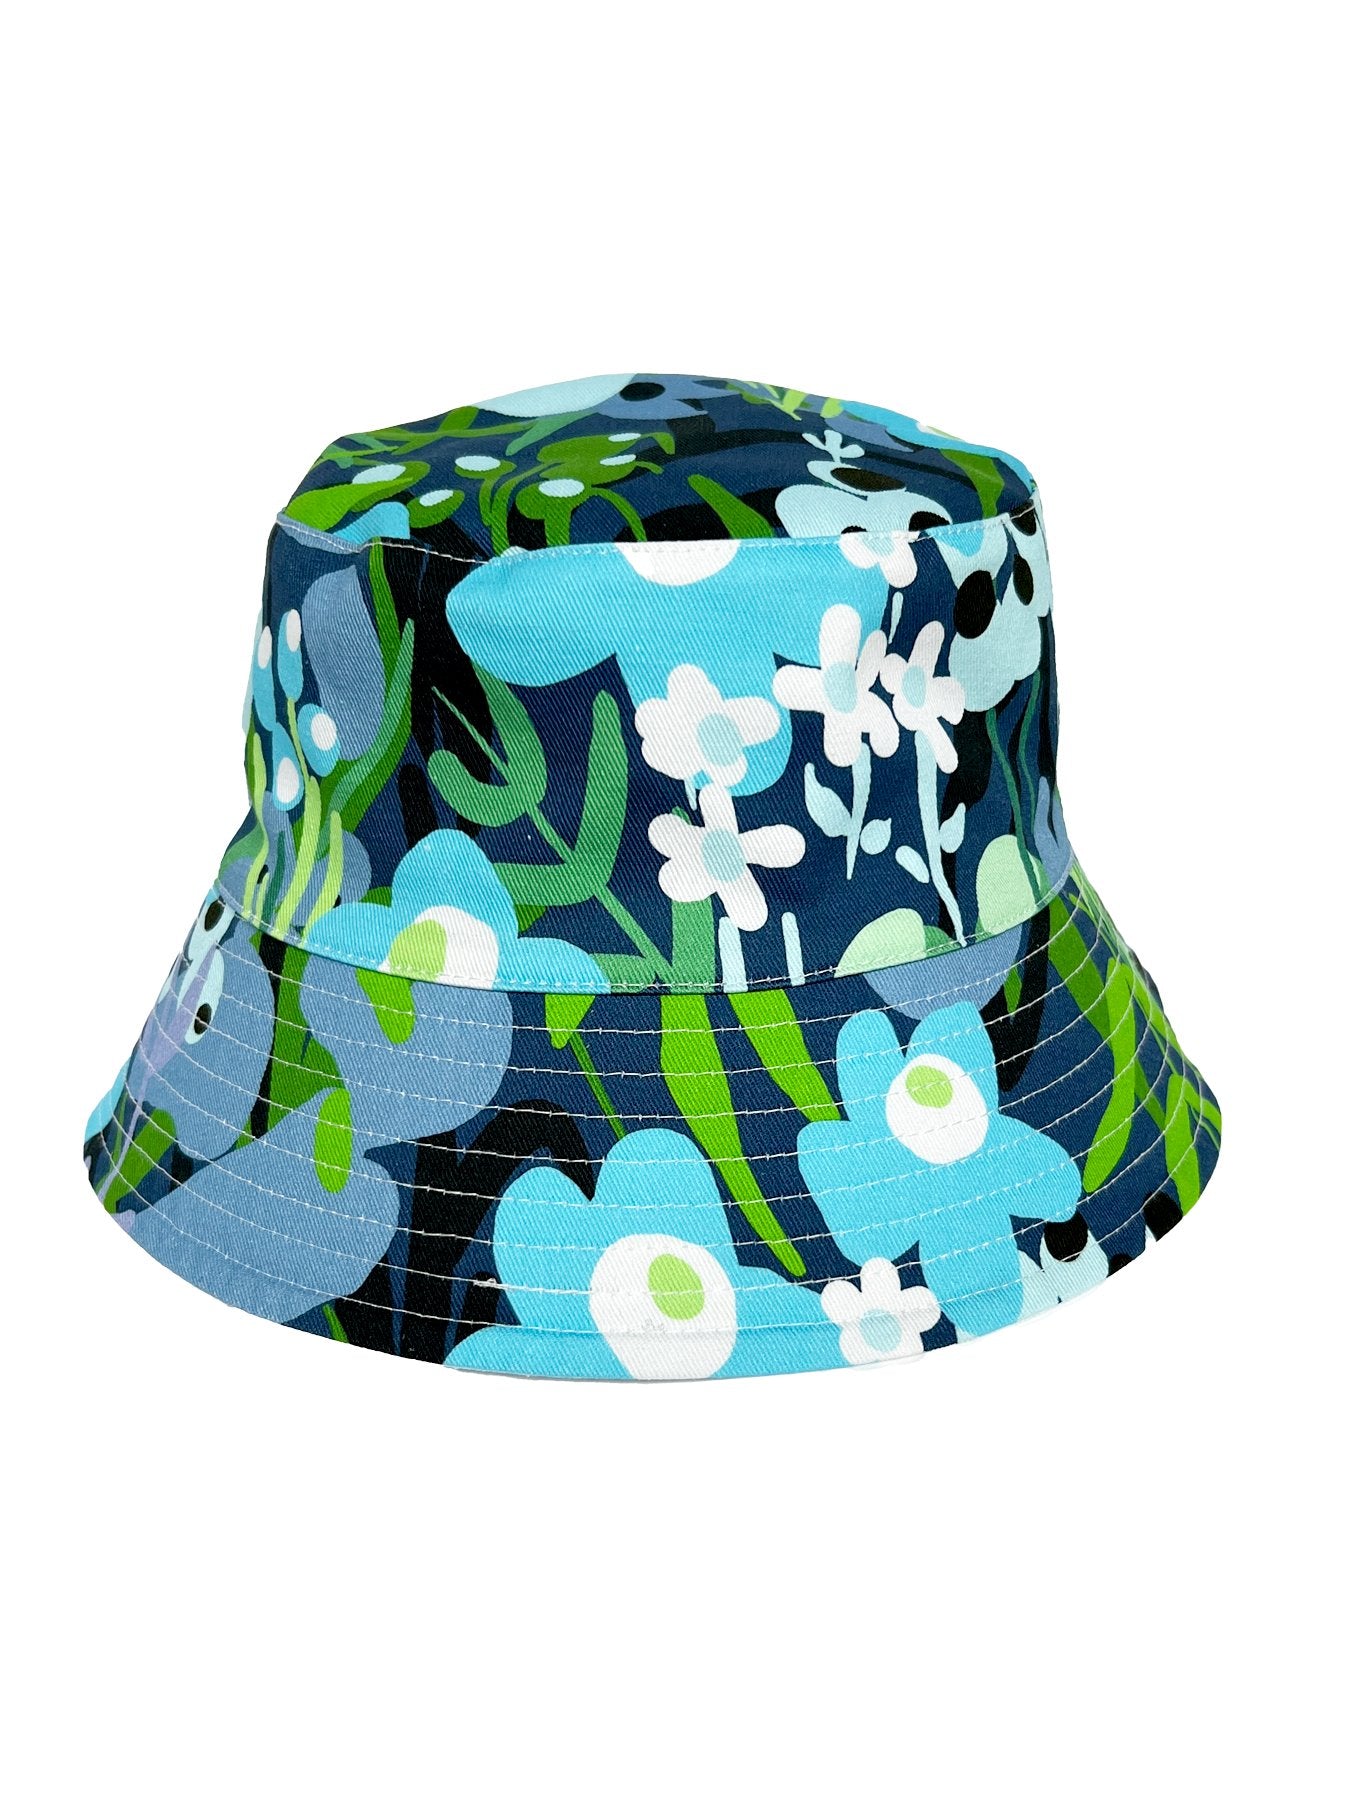 BERTA bucket hat Garden Oasis Blue - Lesley Evers-Best Seller-Blue-blue hat